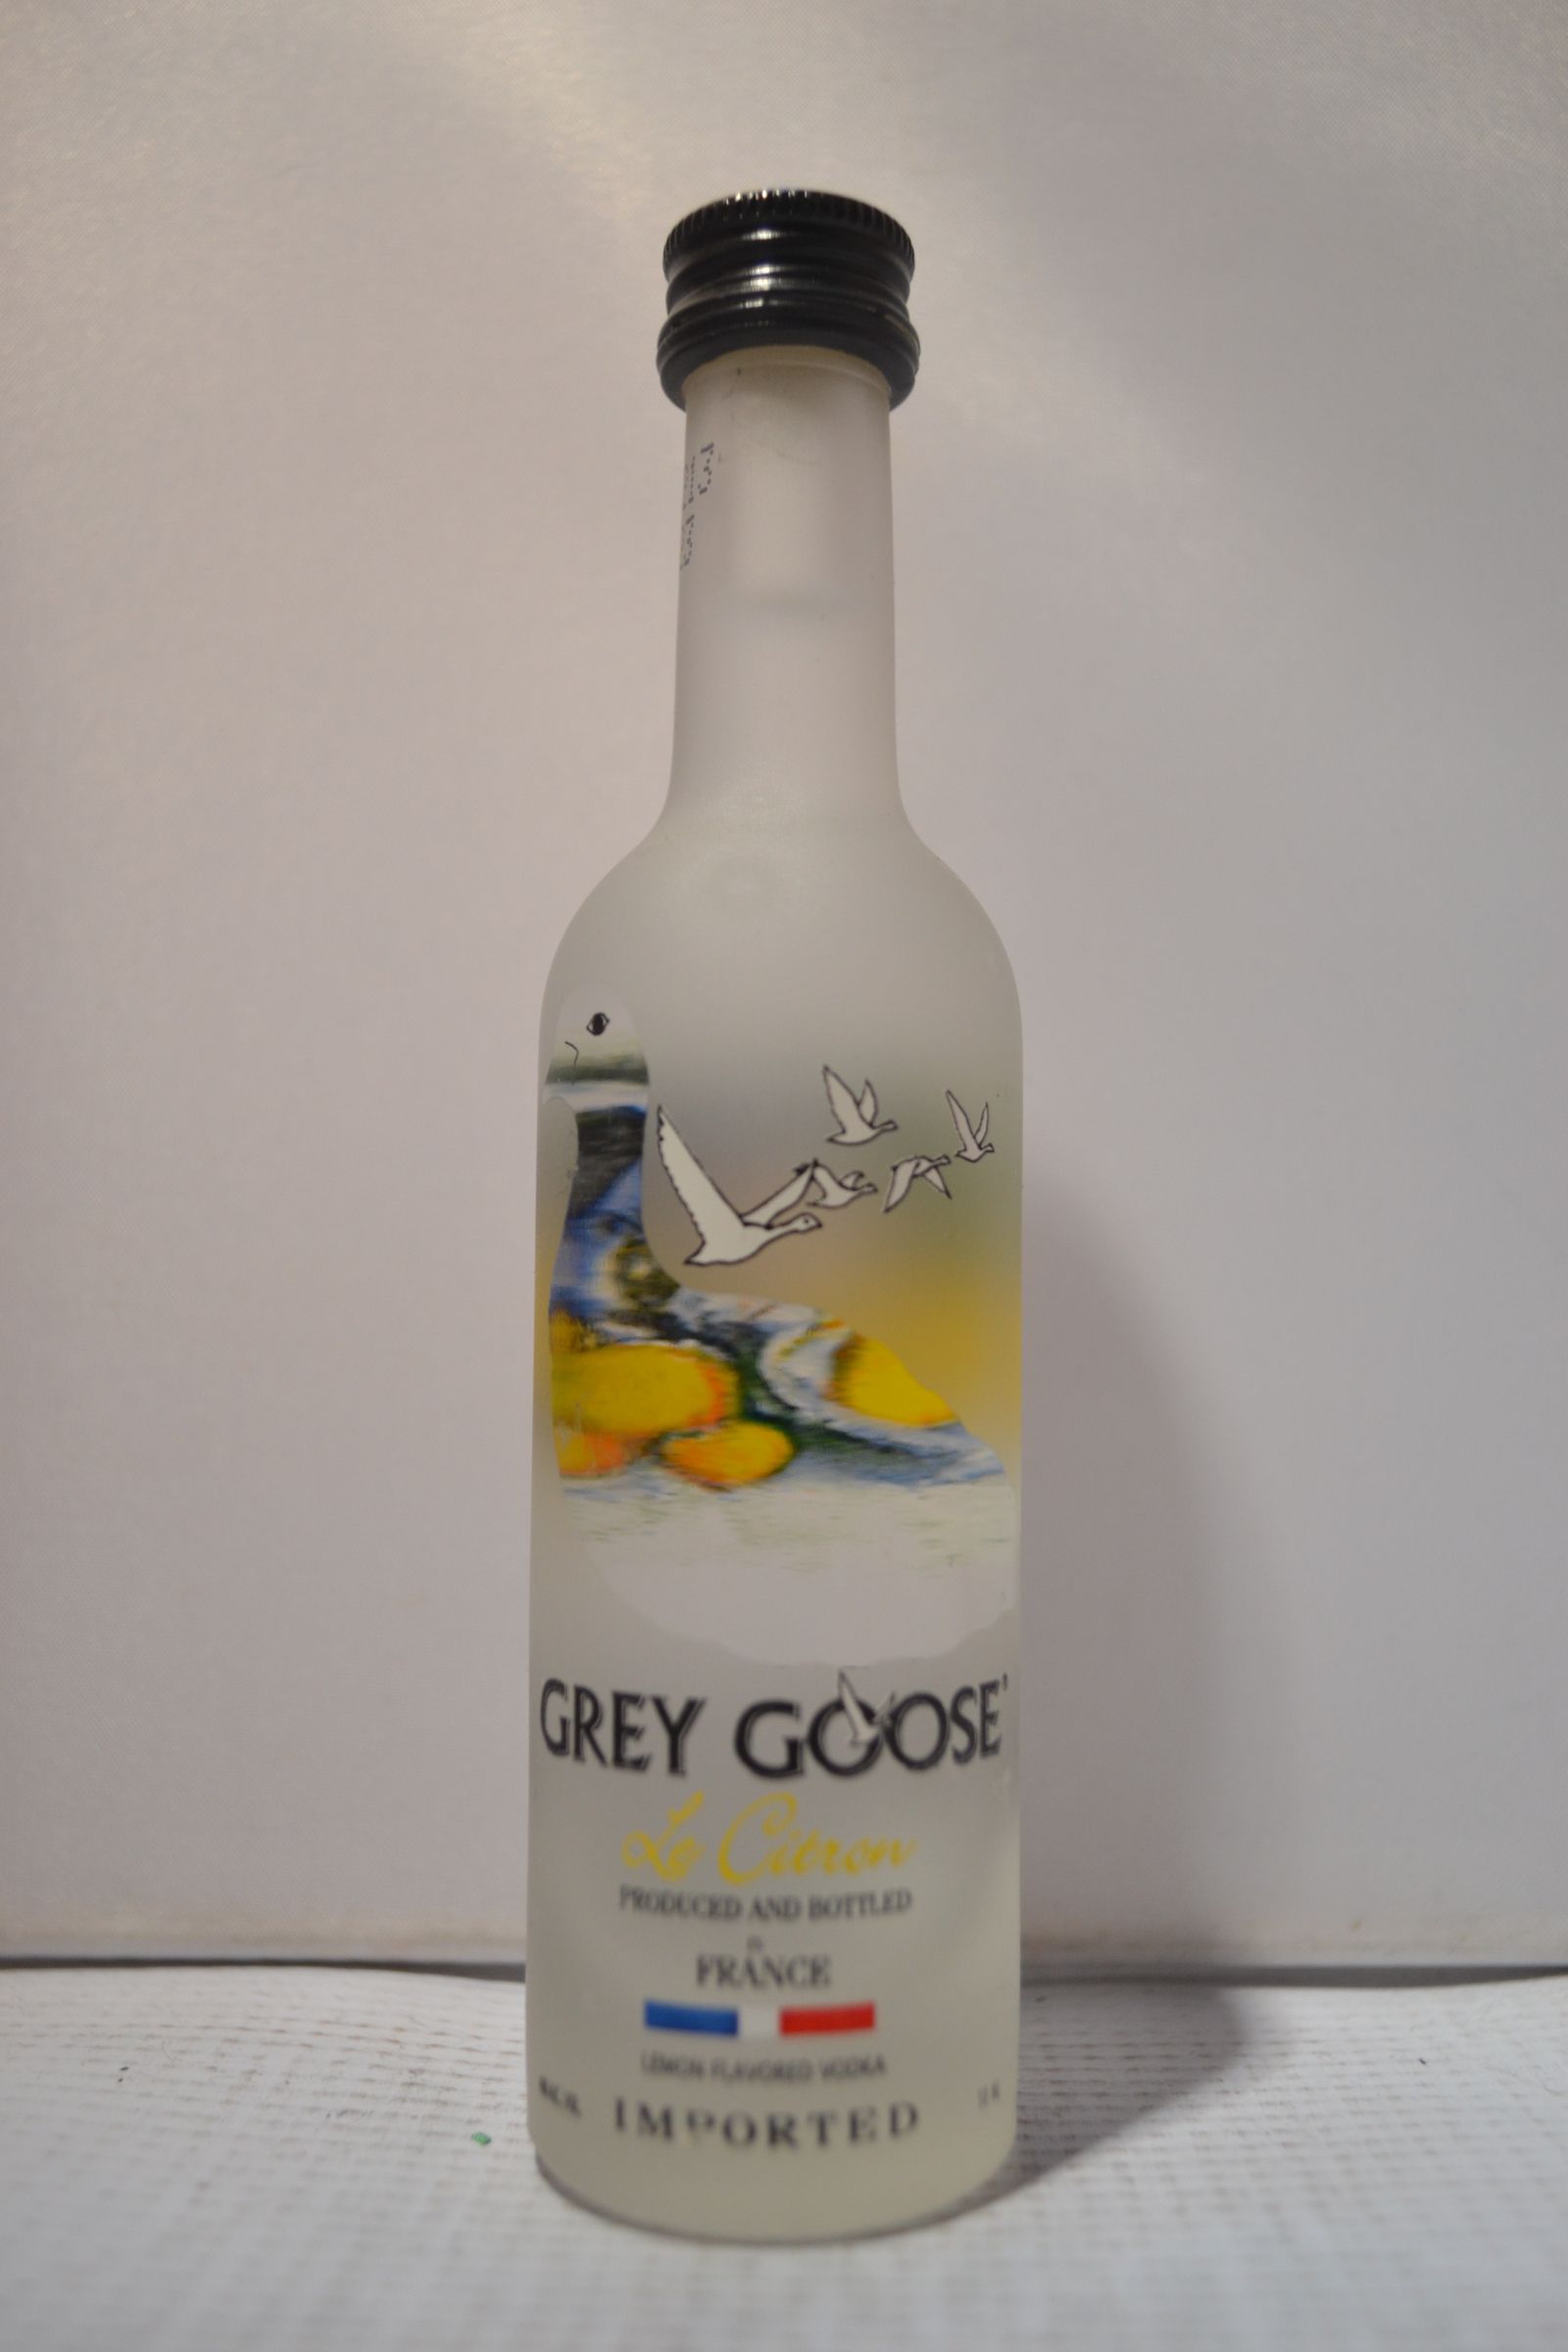 Grey Goose Vodka - 50 ml bottle